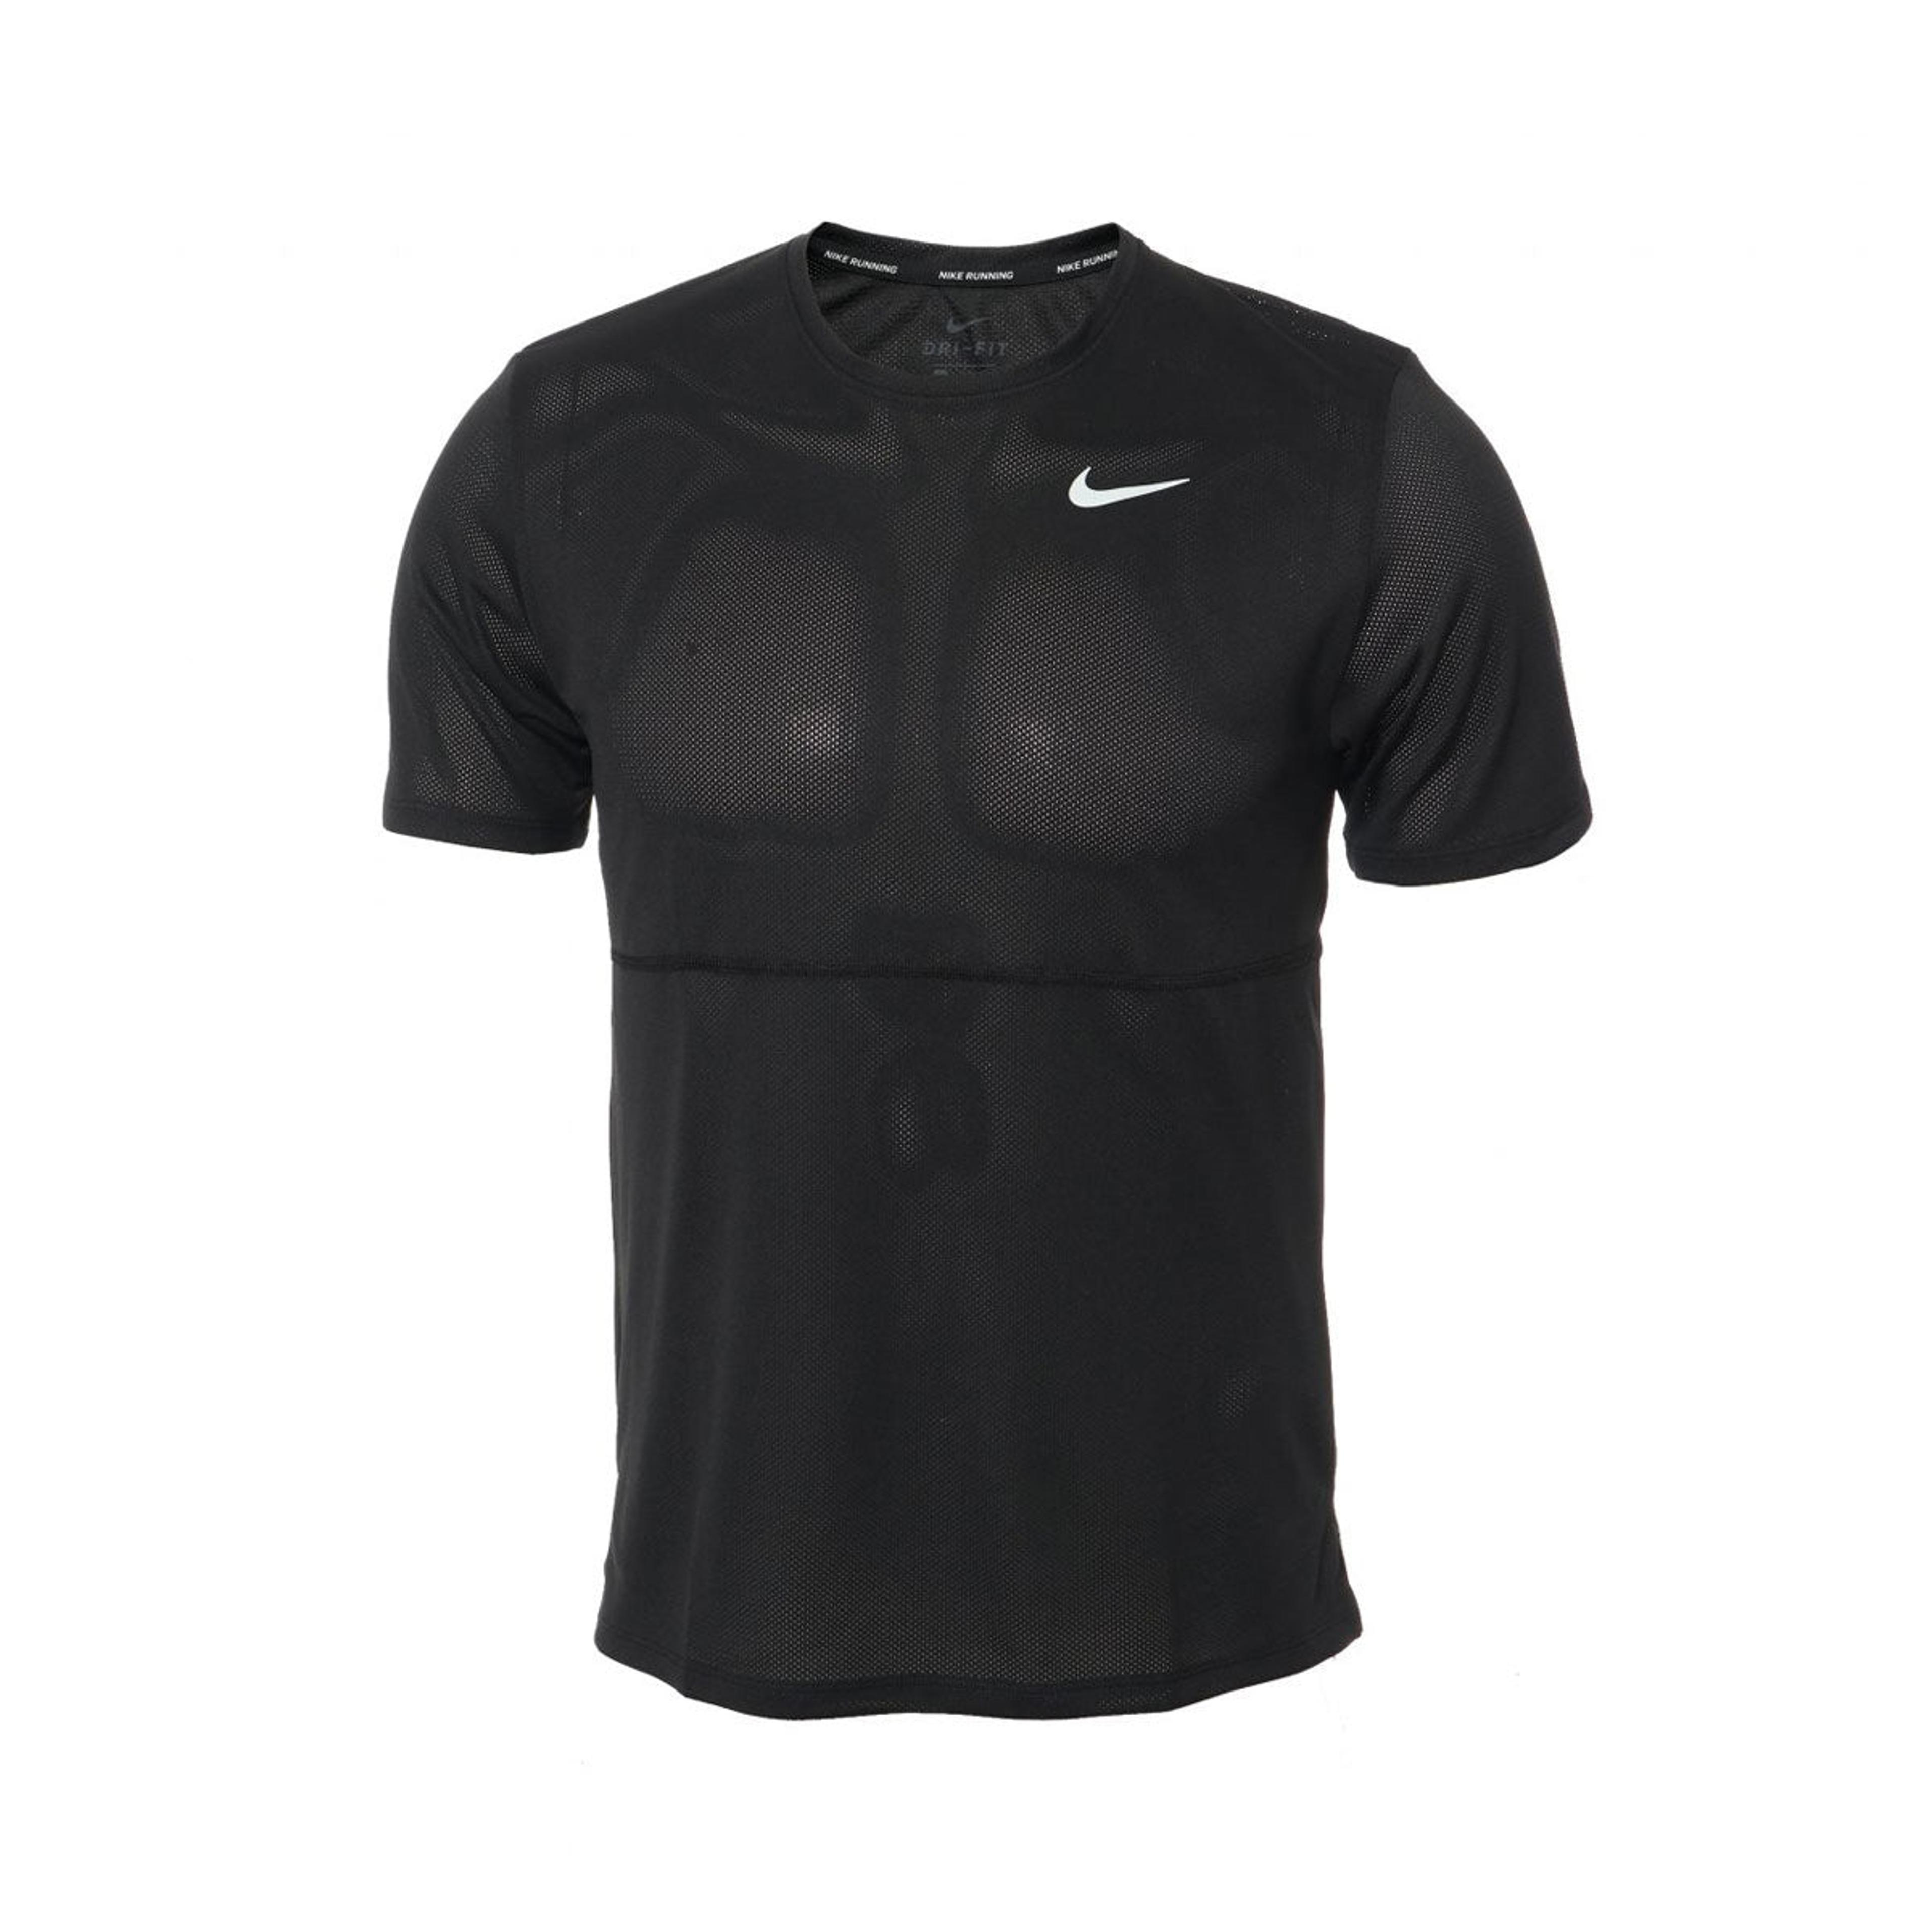 Alternate View 4 of Nike Men's Breathe Short Sleeve Running Top